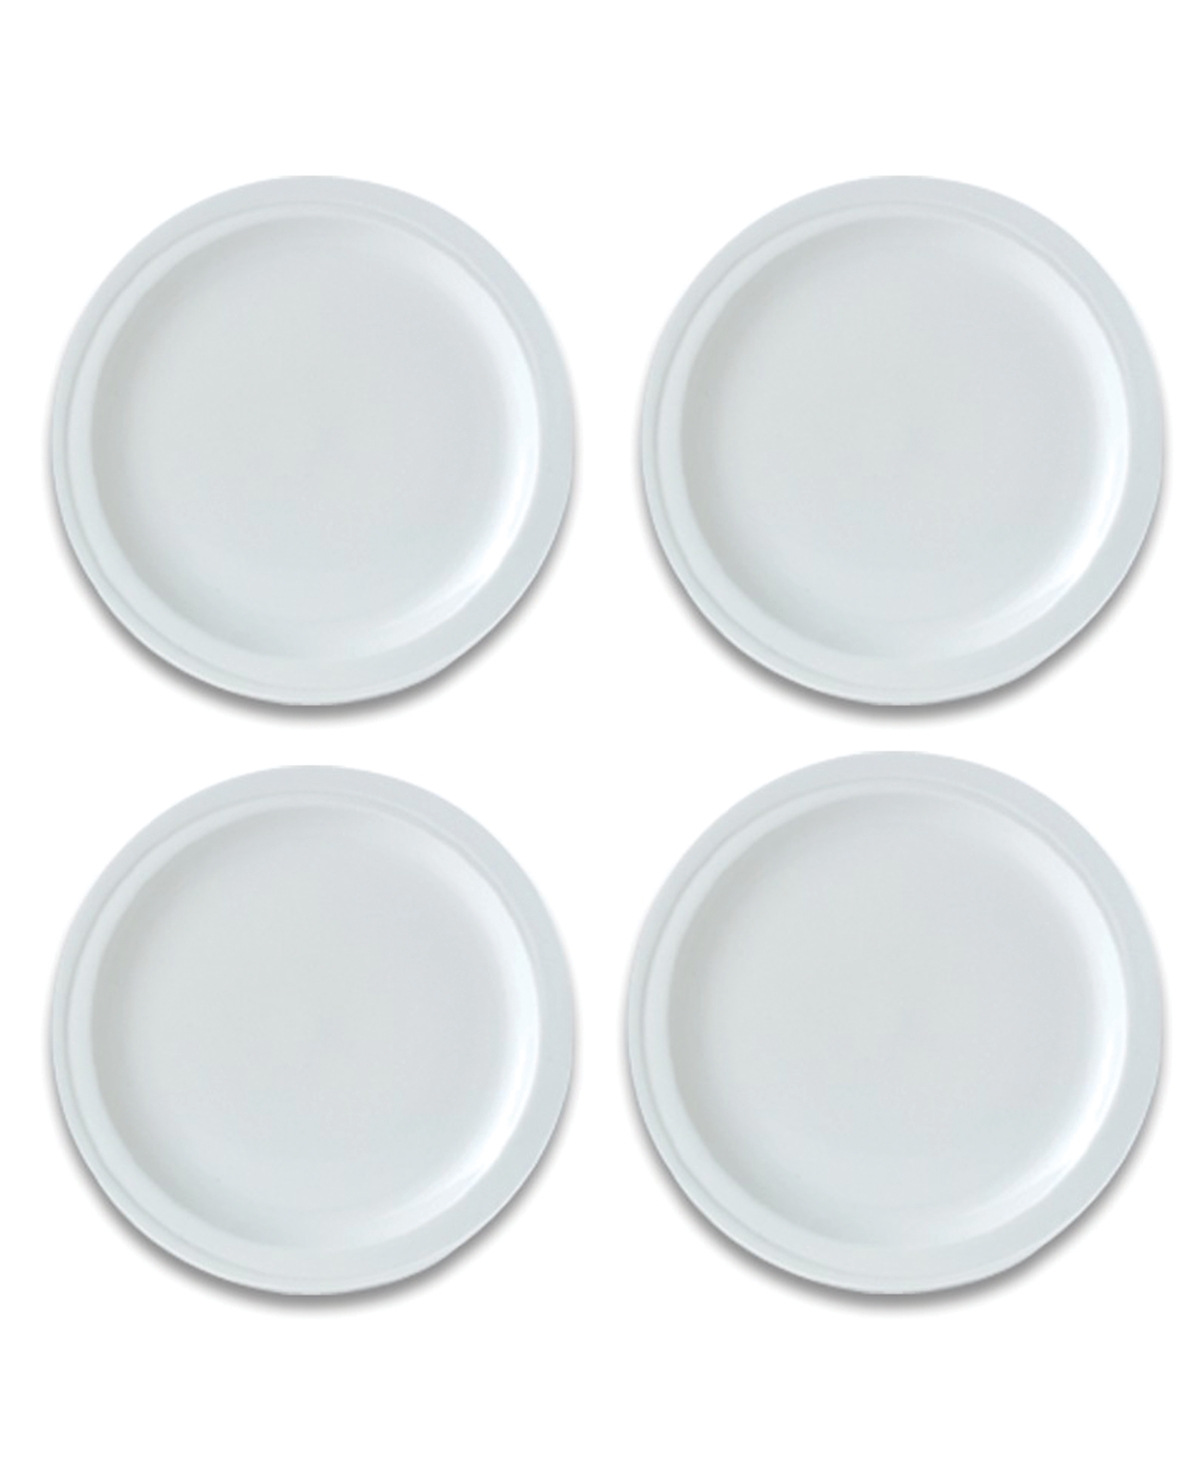 Essentials Porcelain Round Plate, Set of 4